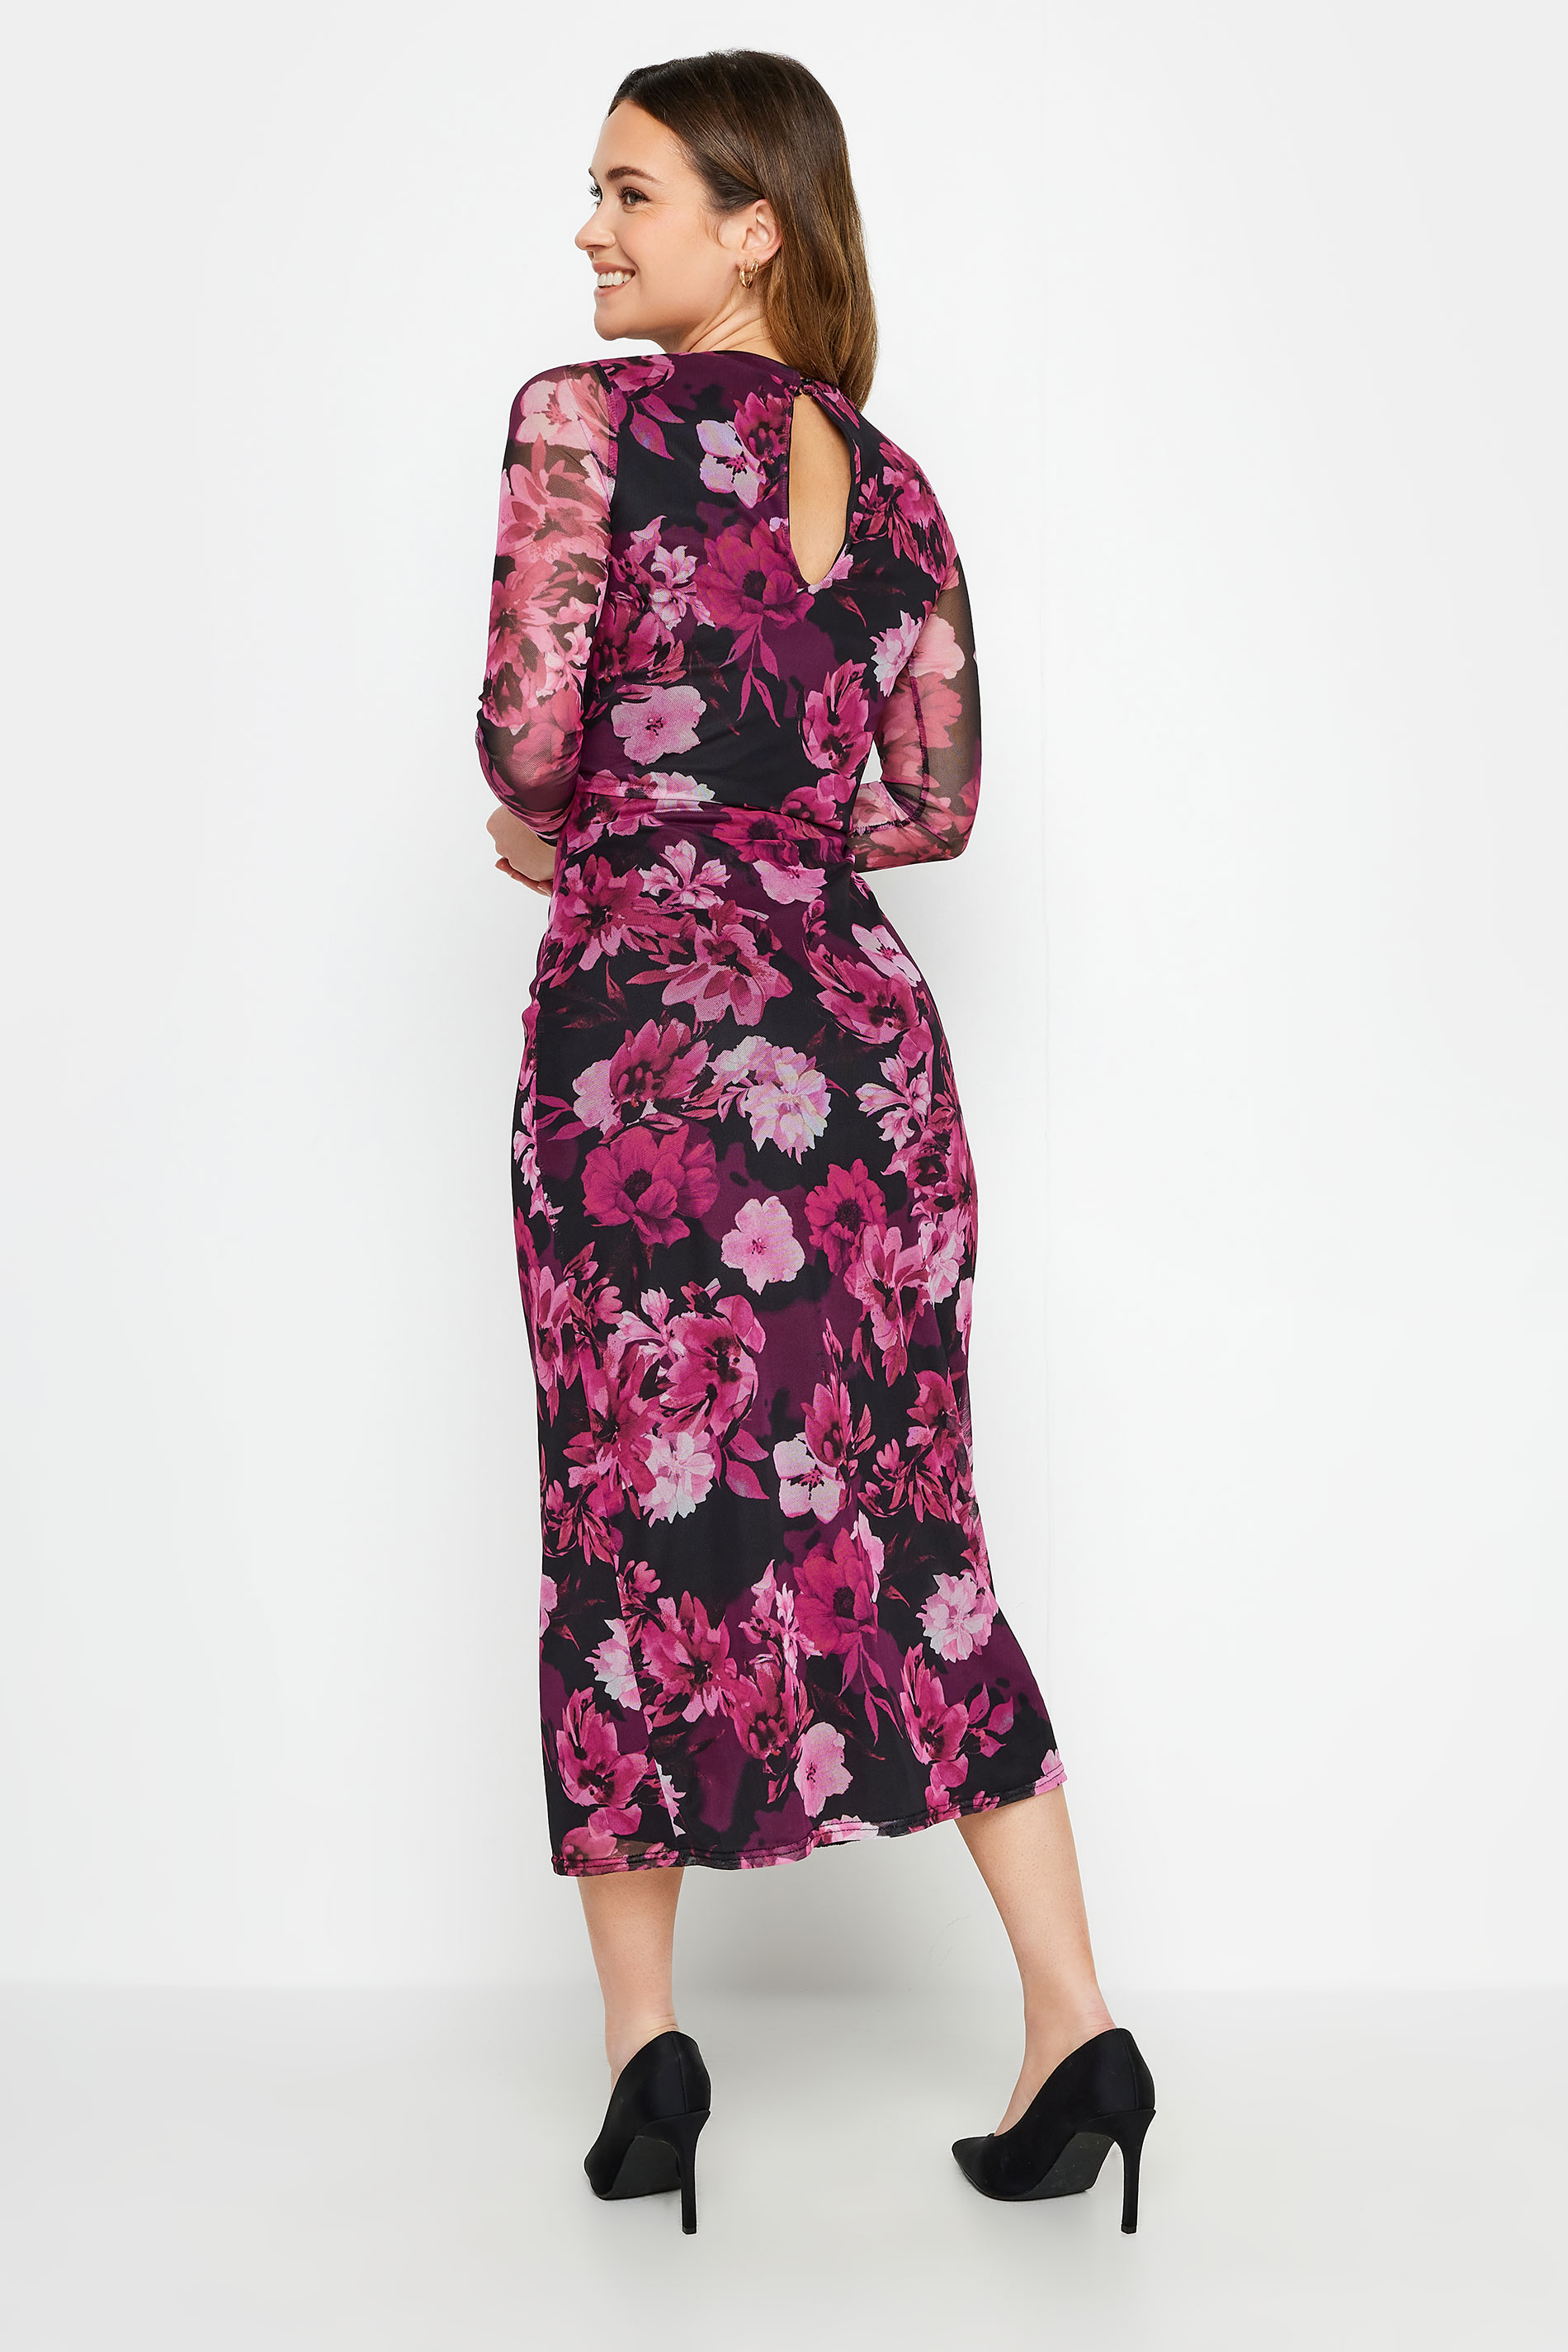 M&Co Petite Pink Floral Mesh Midi Dress | M&Co 3